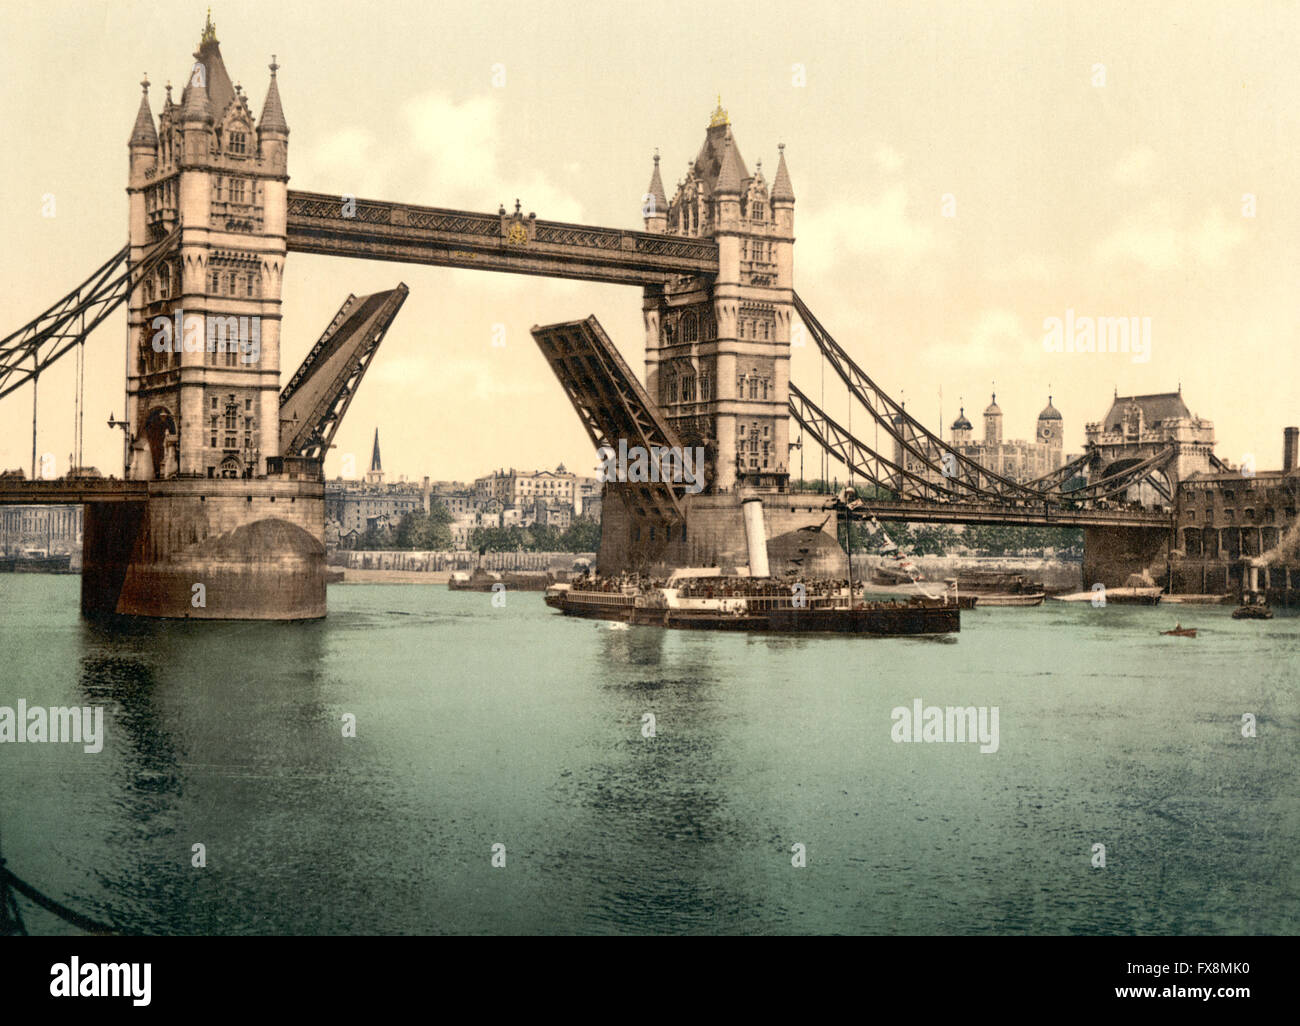 Tower Bridge, ouvert, Londres, Angleterre, Royaume-Uni, impression Photochrome, vers 1900 Banque D'Images